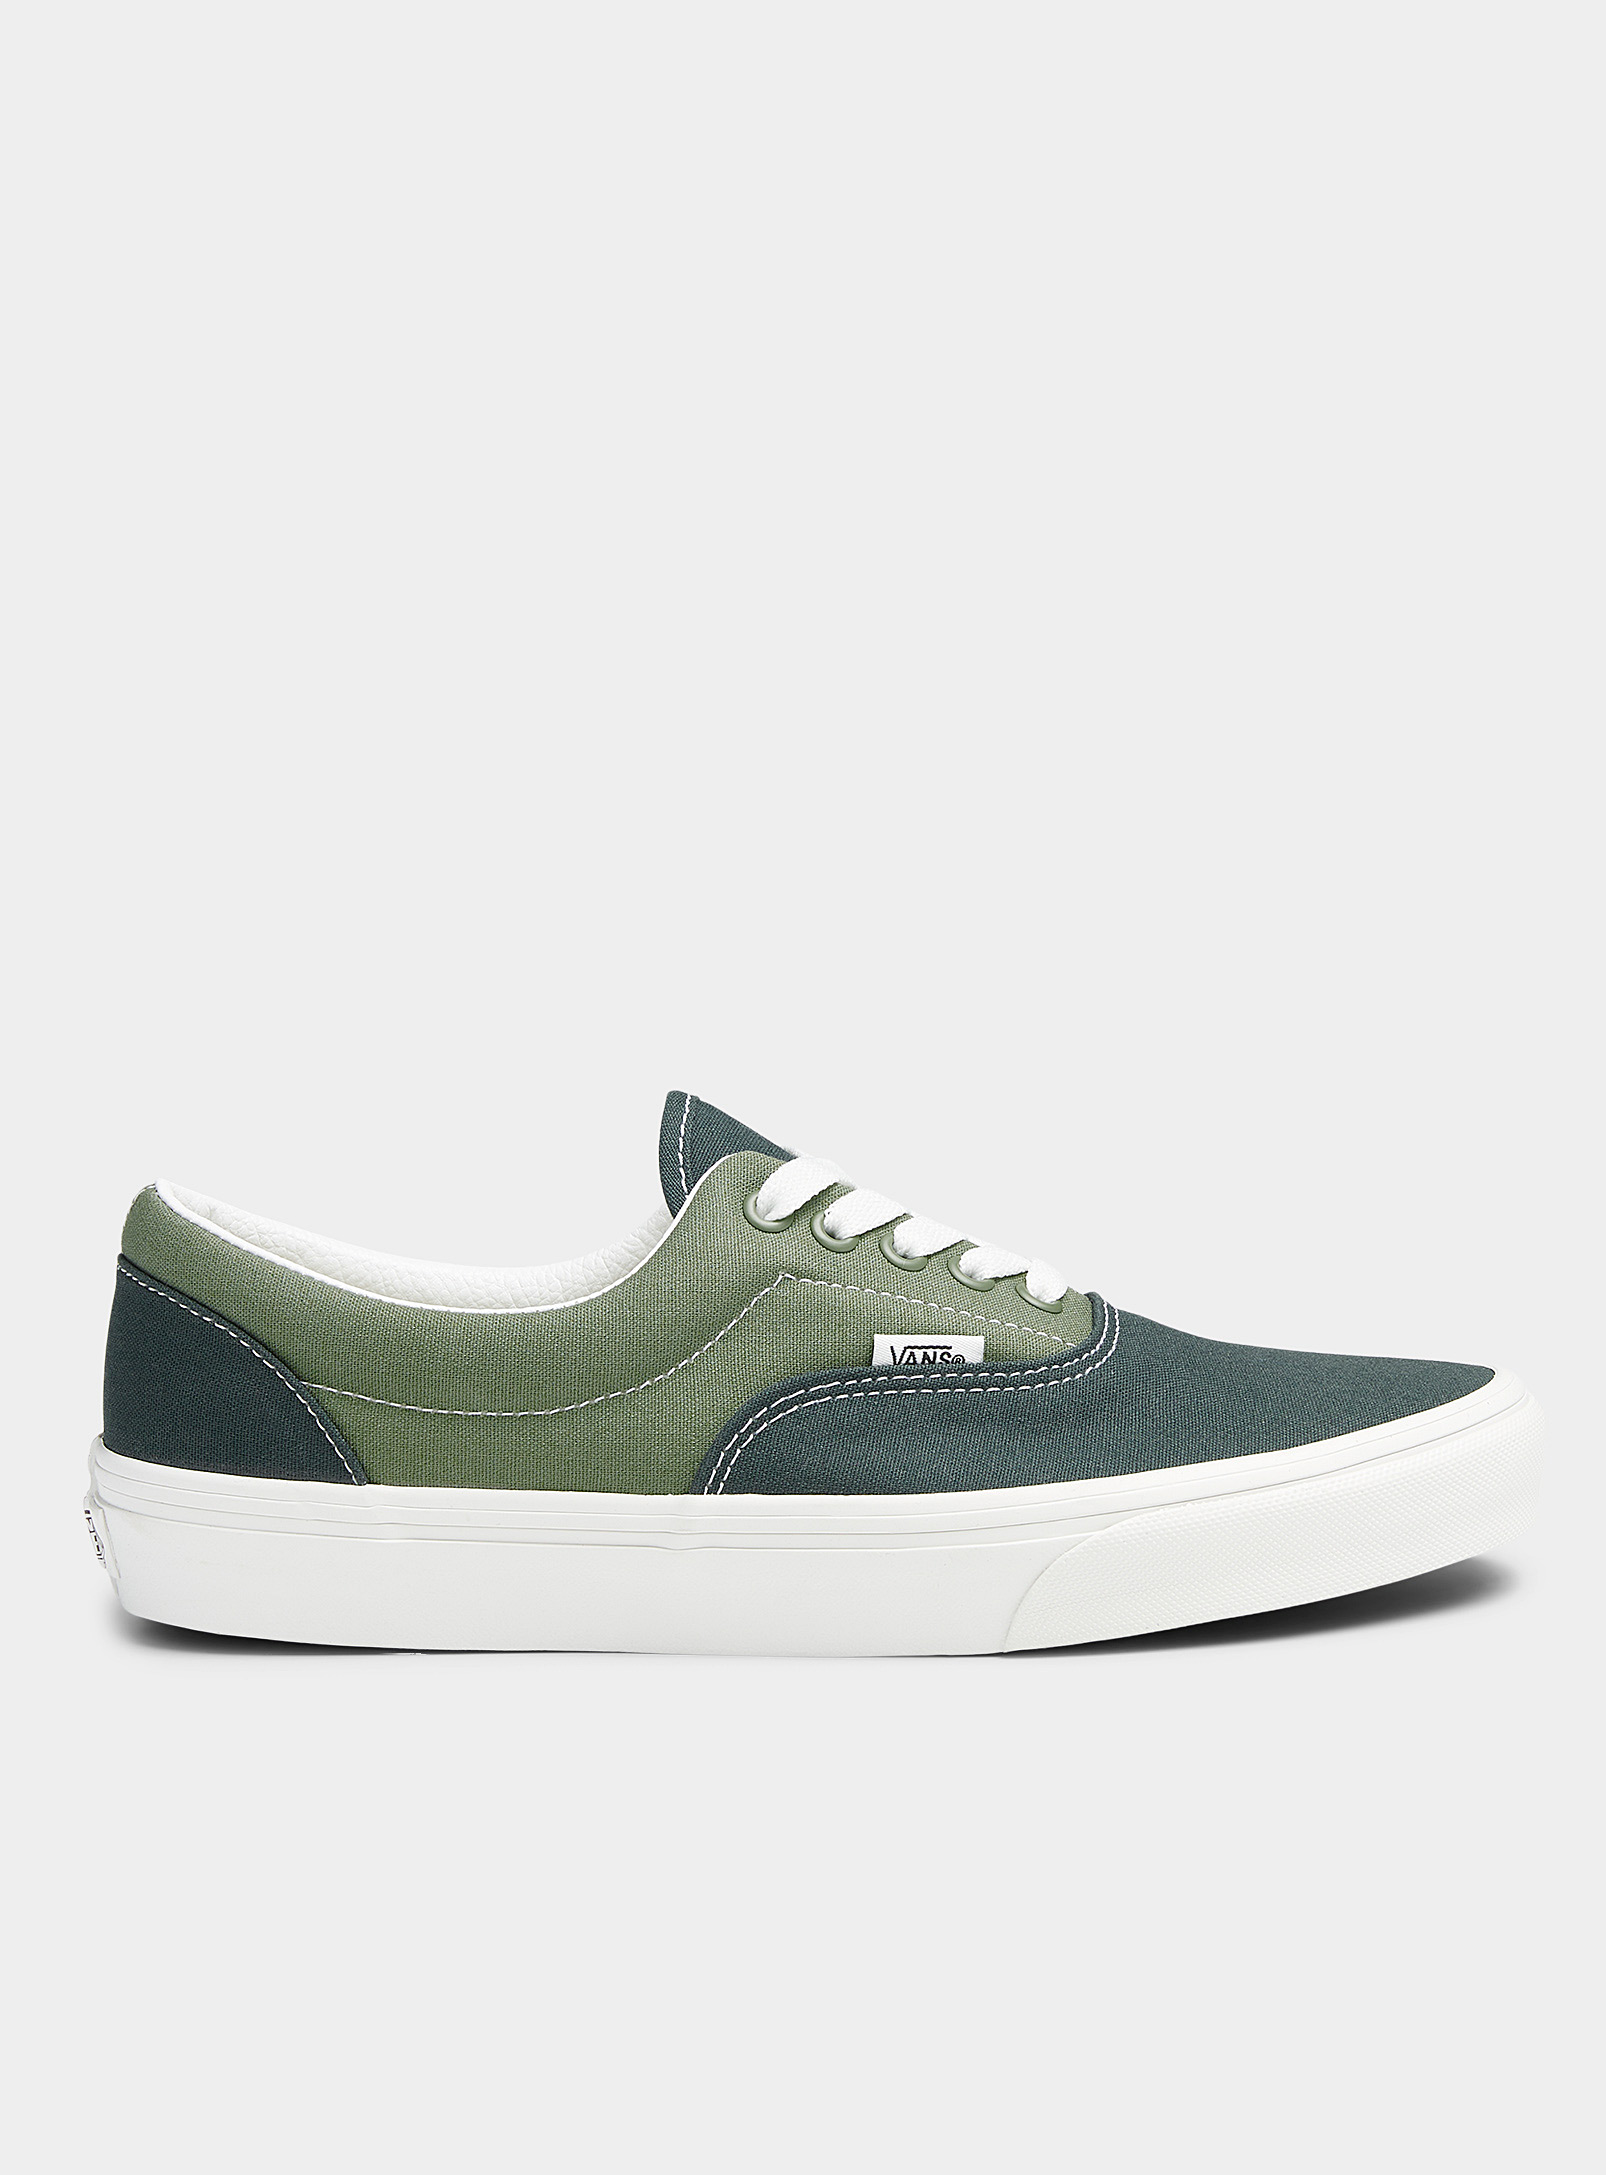 Vans Era Tri-tone Green Sneakers Men In Khaki/sage/olive